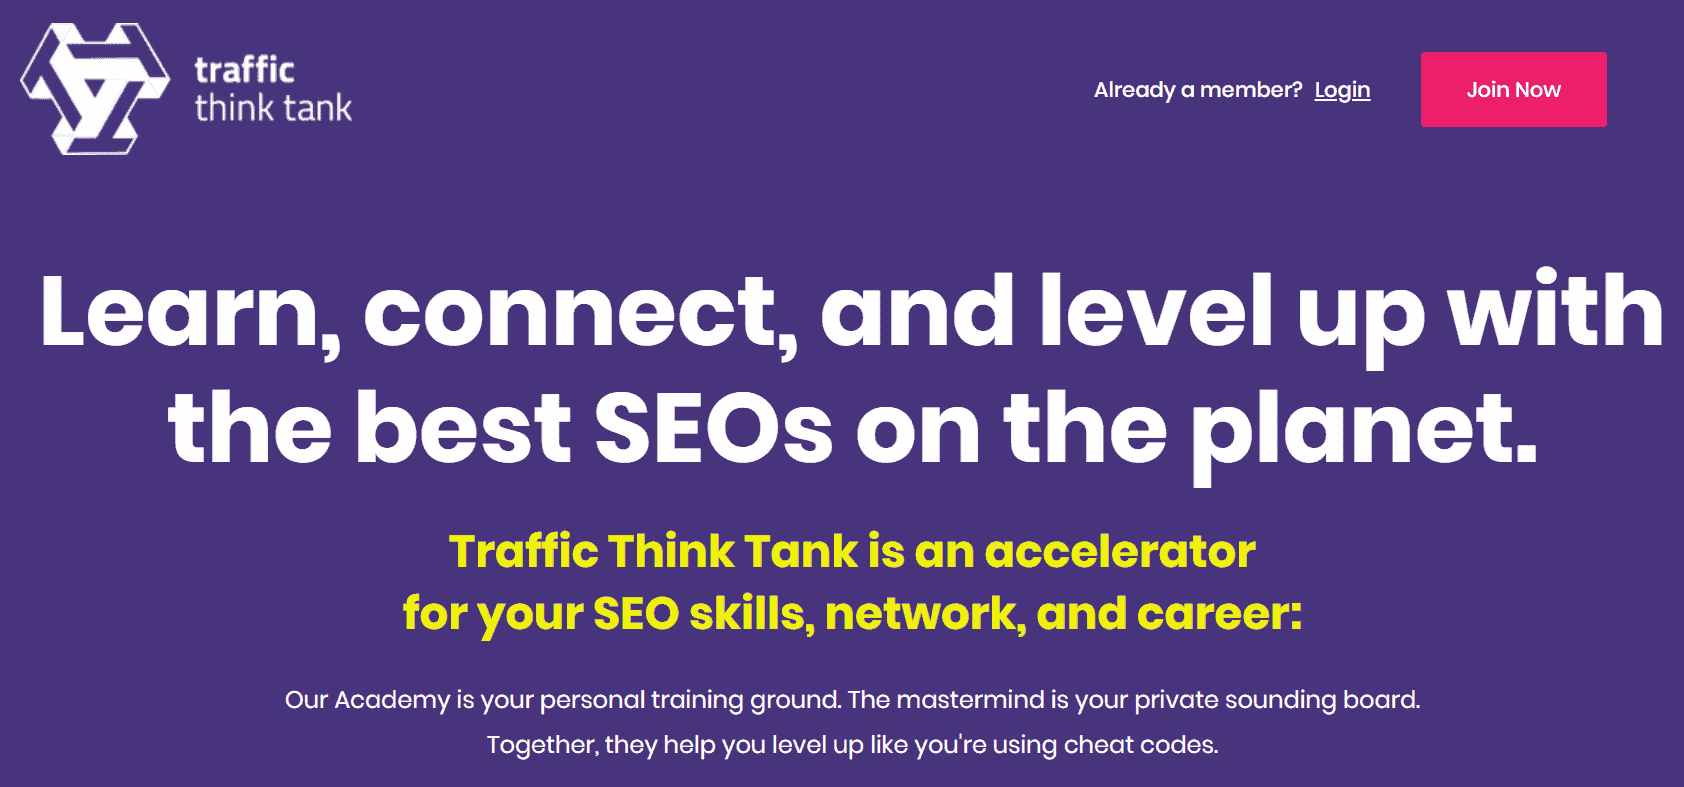 Website ideas - Traffic Think Tank